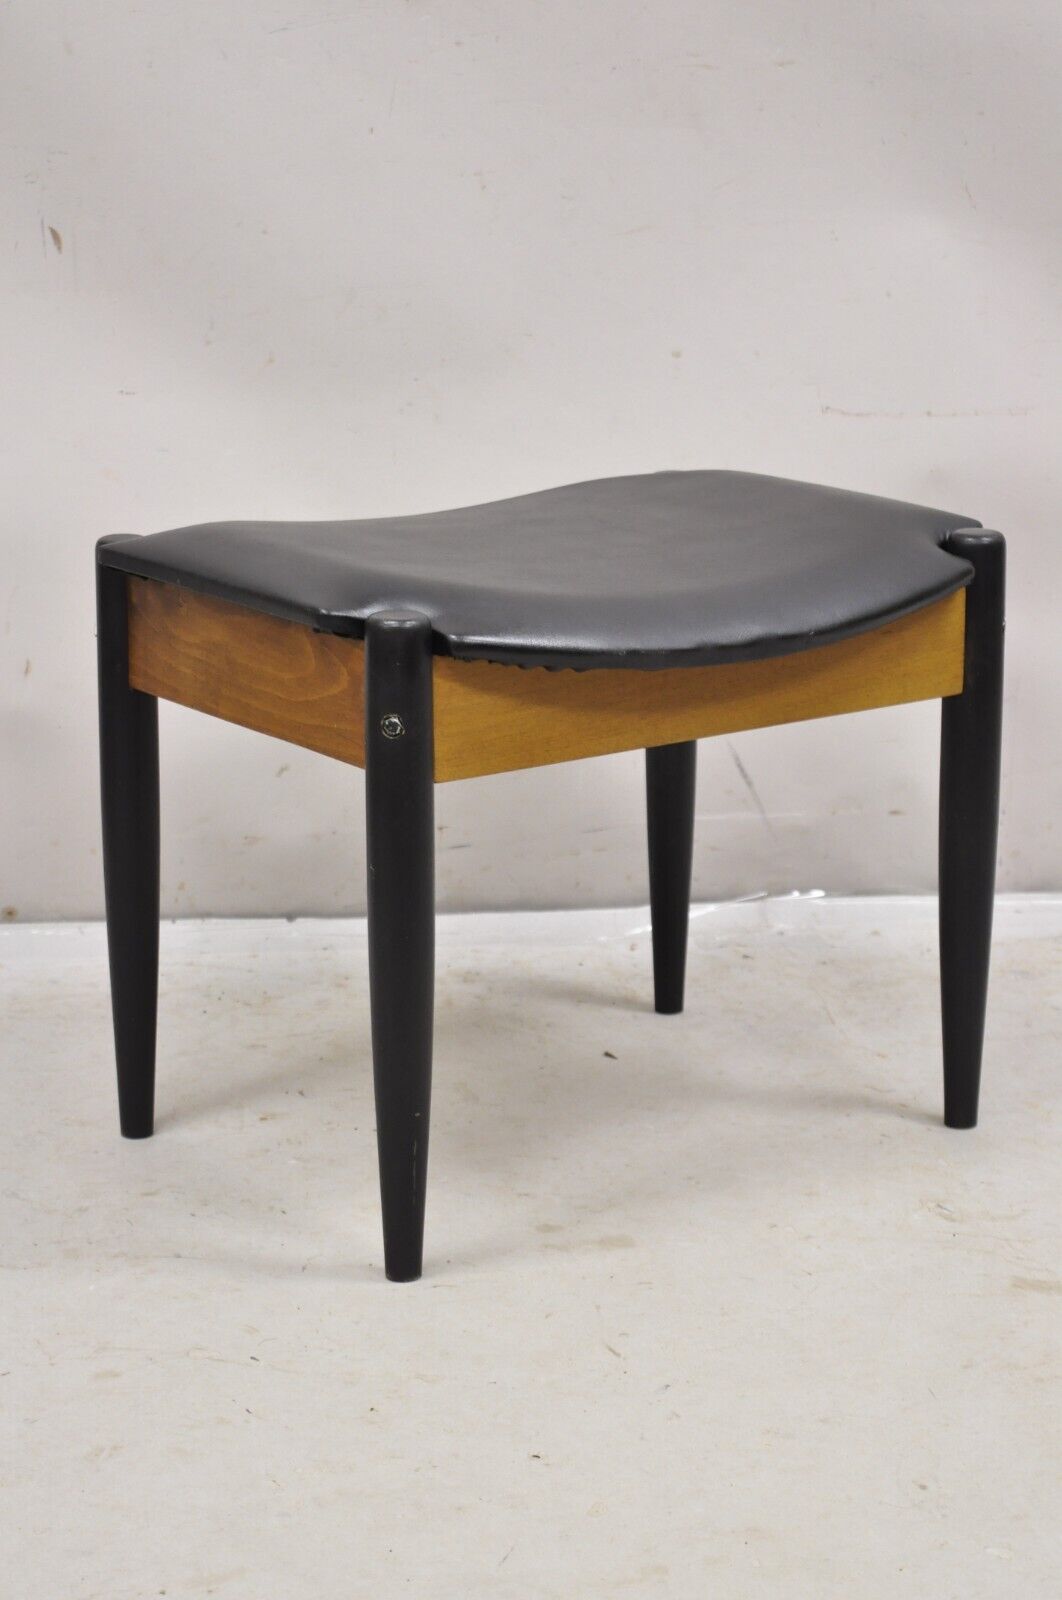 Norco Mid Century Modern Sculpted Footstool Ottoman Tapered Leg Black Vinyl Seat